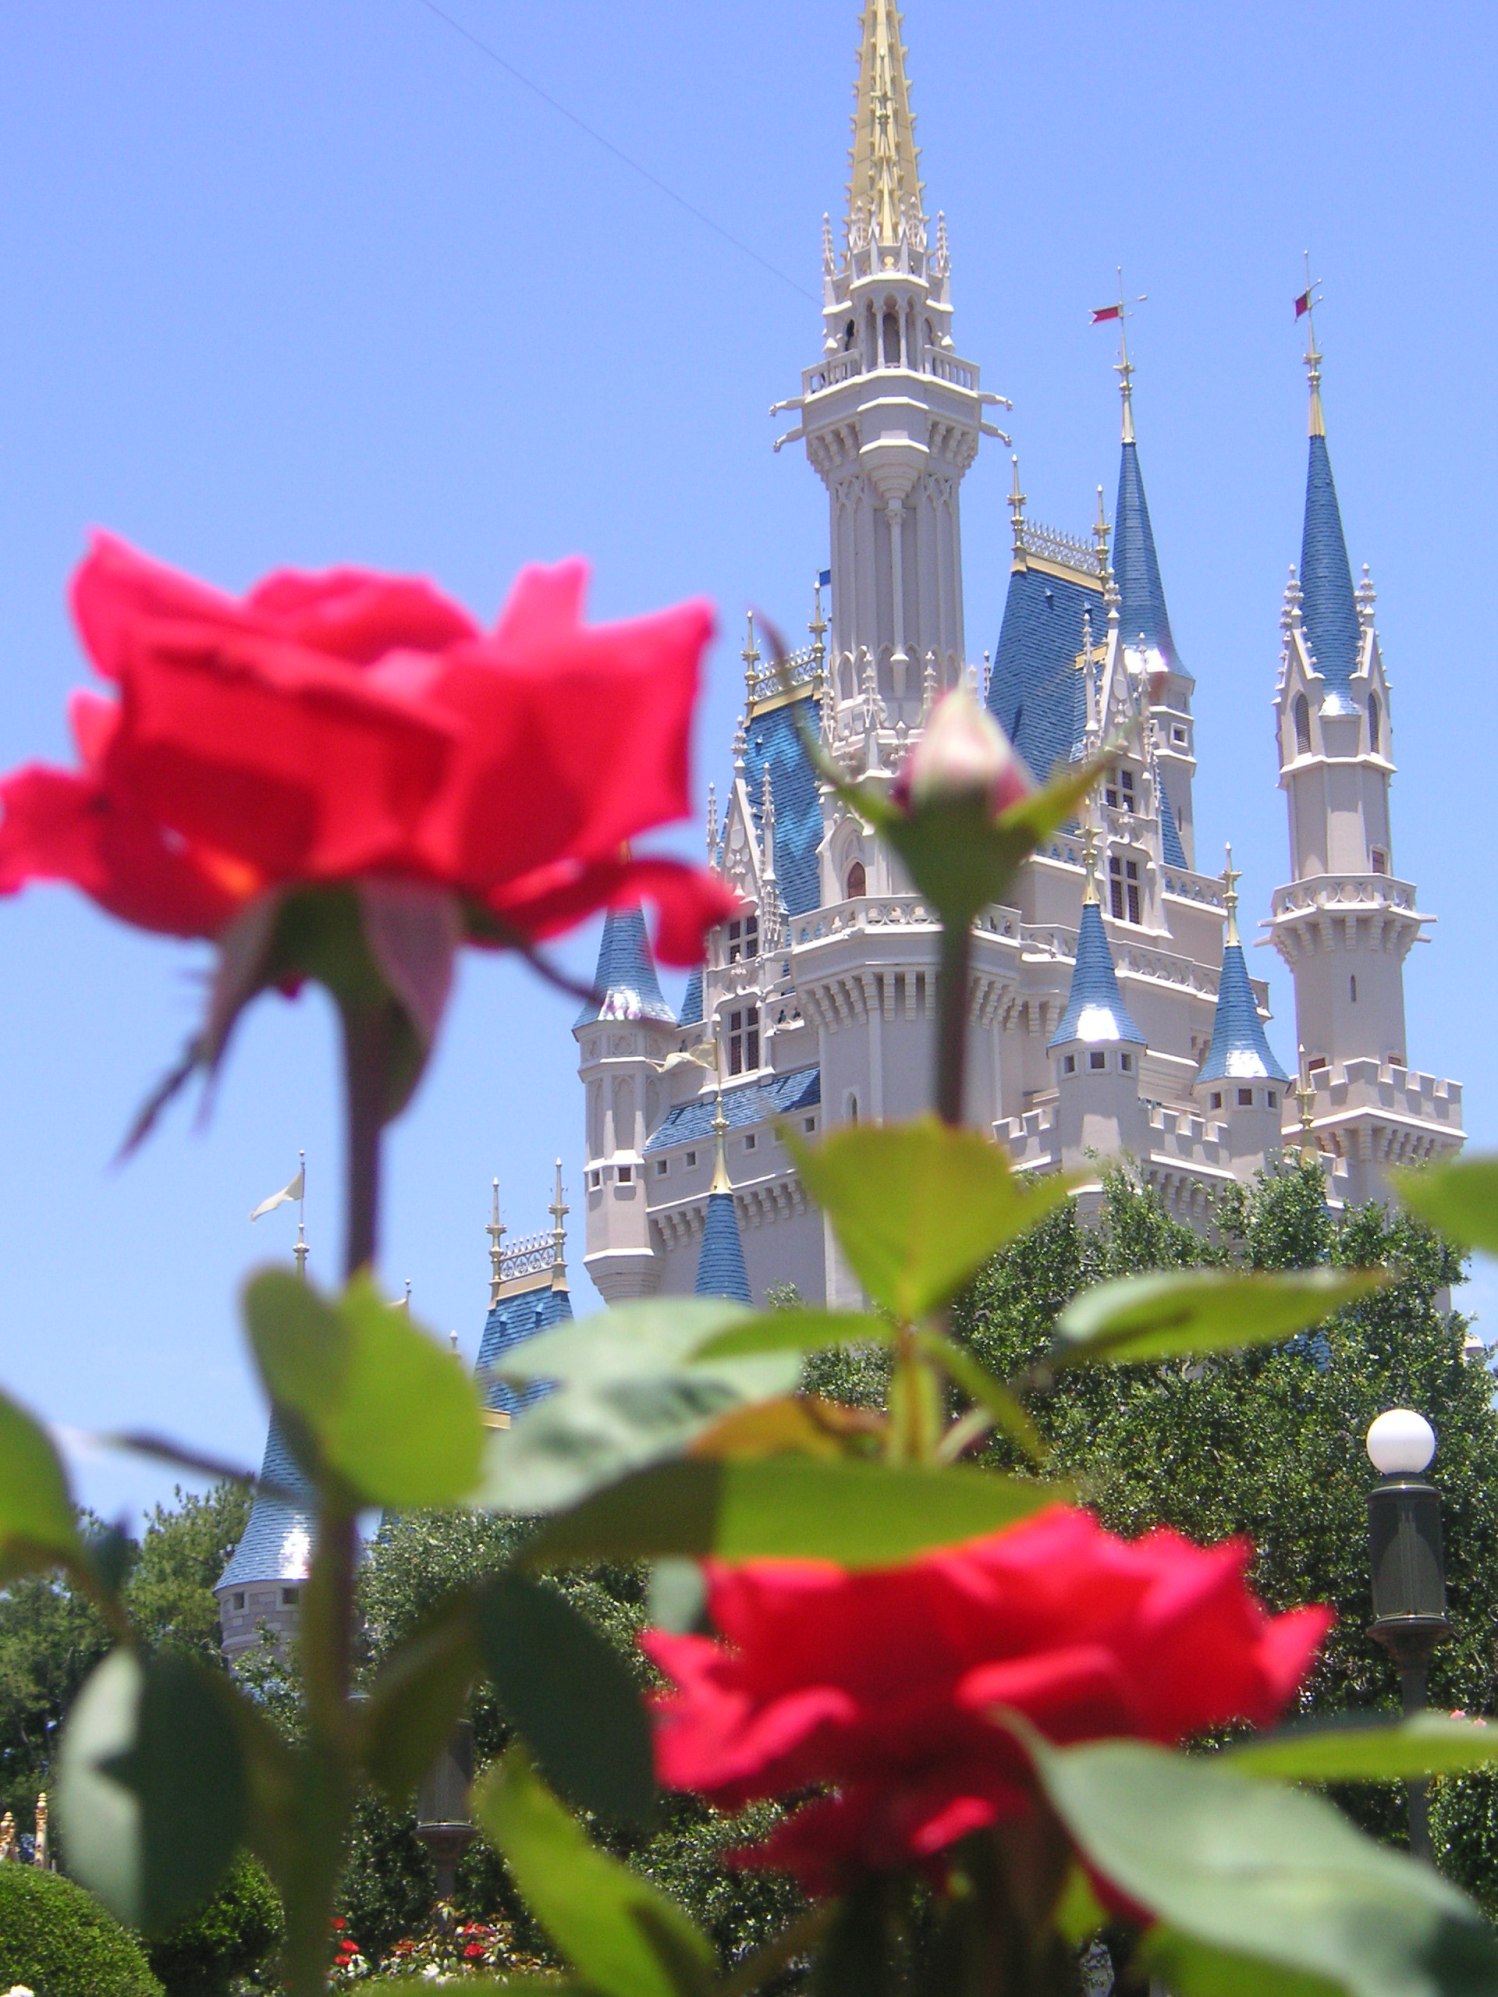 Magic Kingdom - Cinderella Castle from the Rose Garden